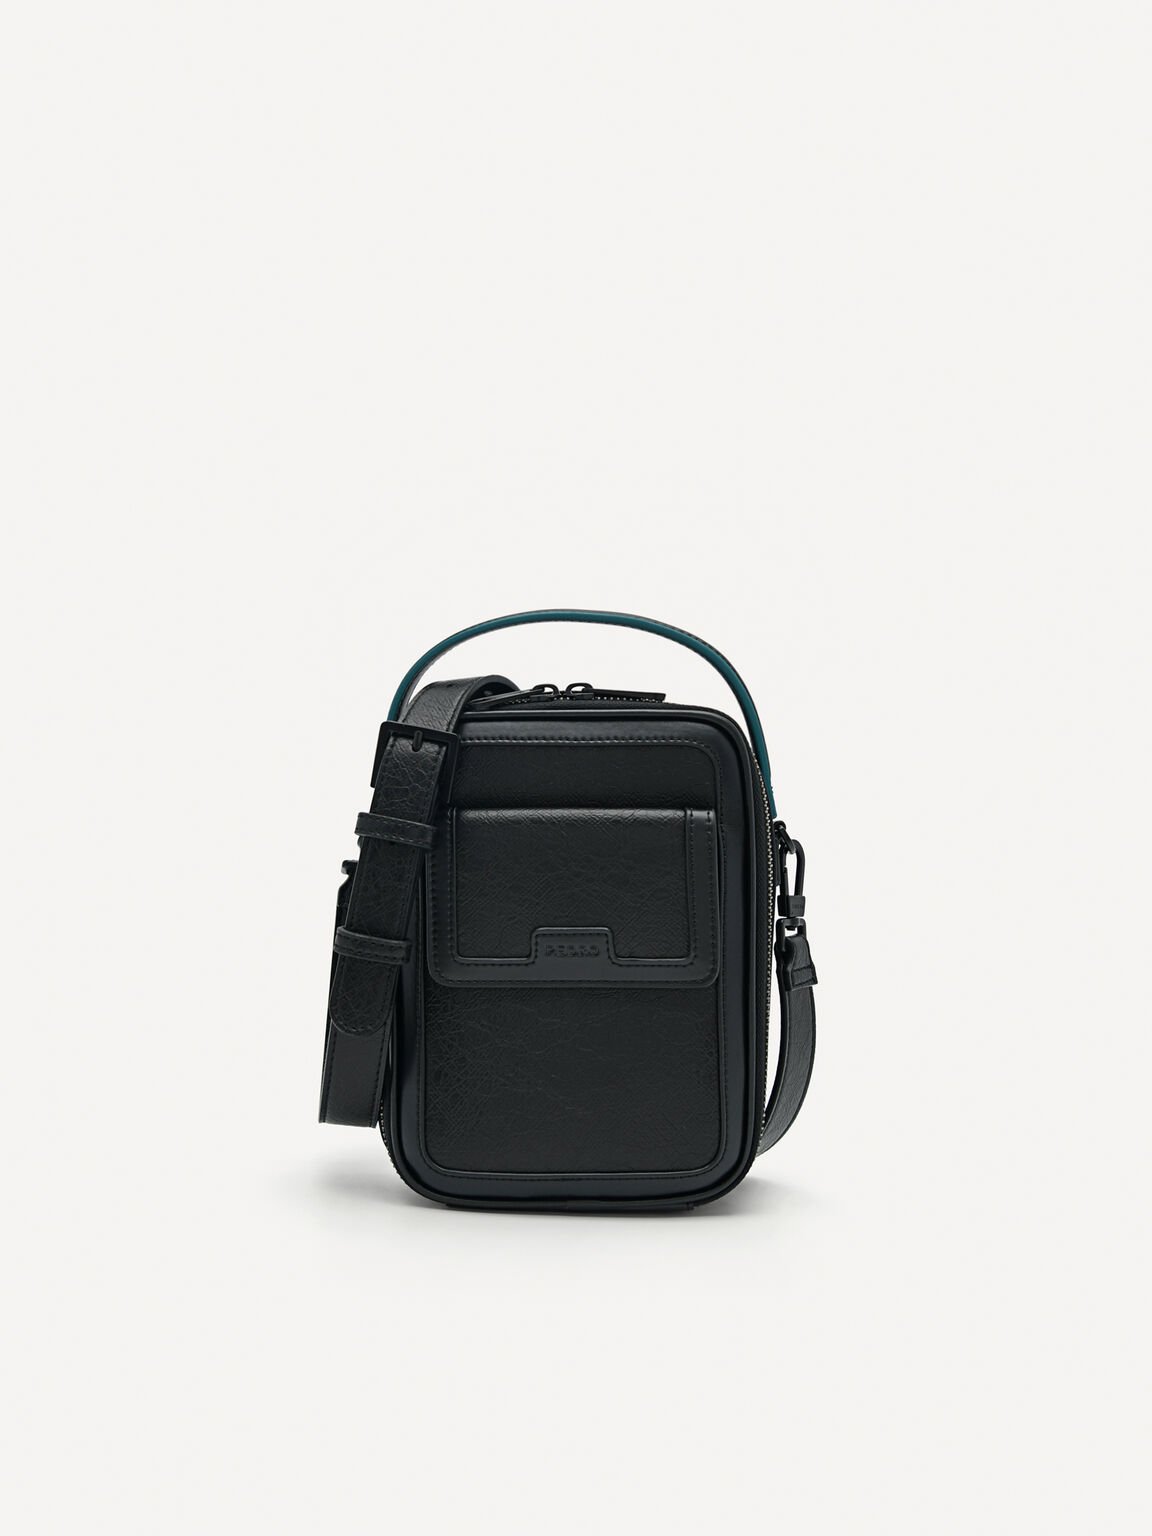 Black Synthetic Leather Zipper Sling Bag, Black